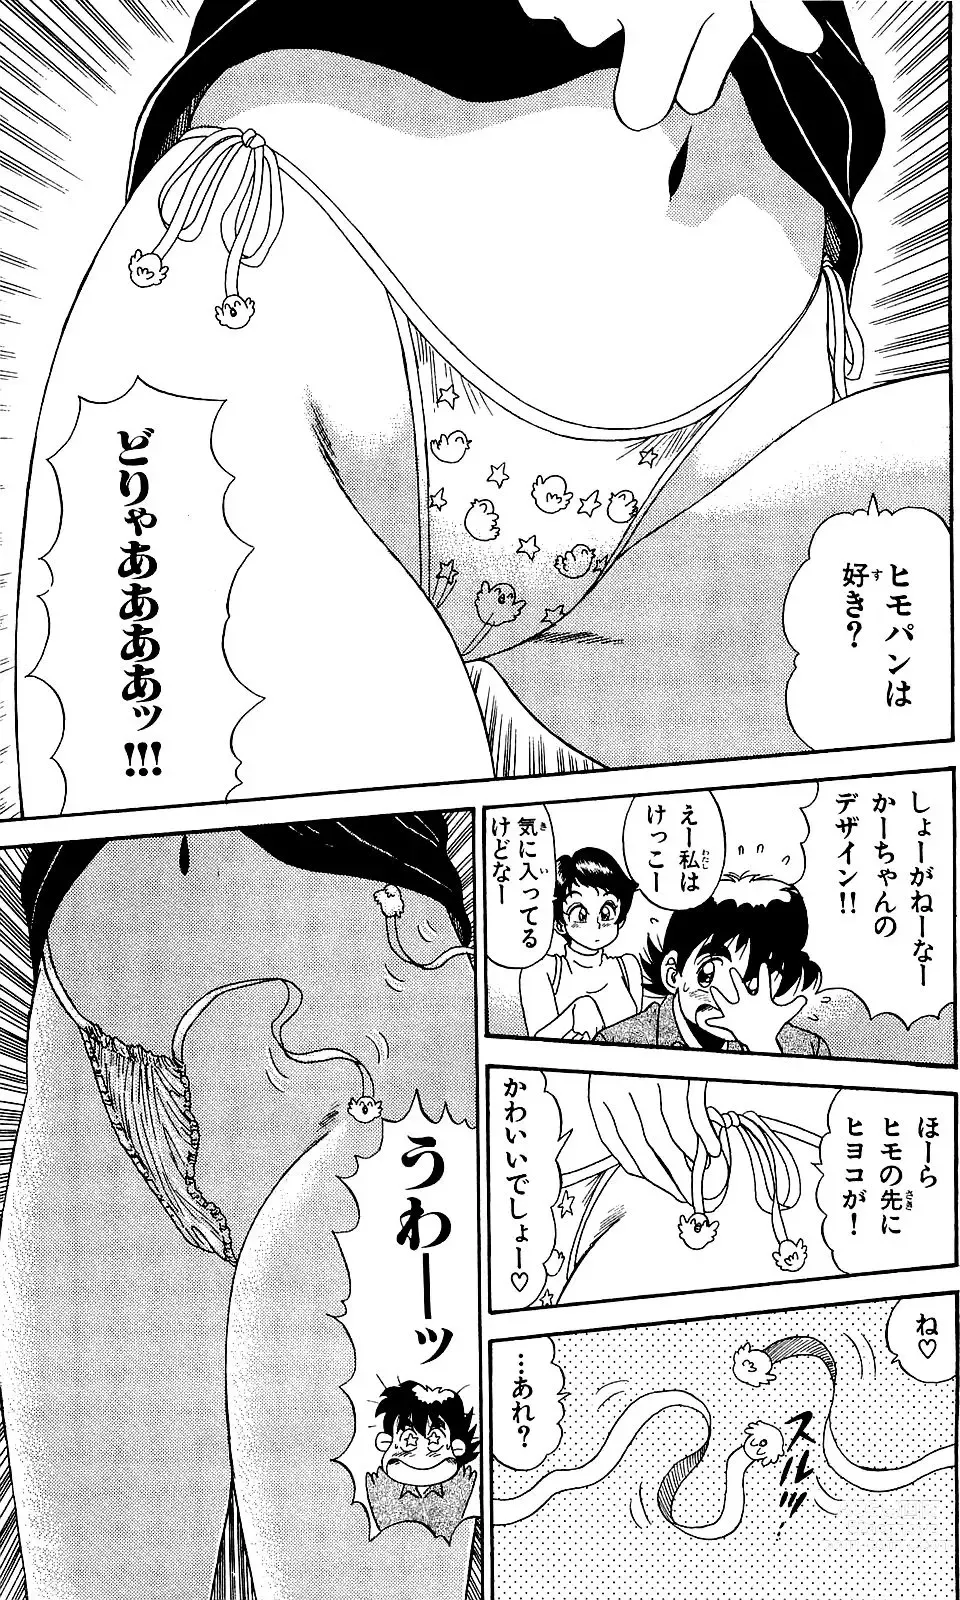 Page 185 of manga Orette Piyoritan Vol. 1